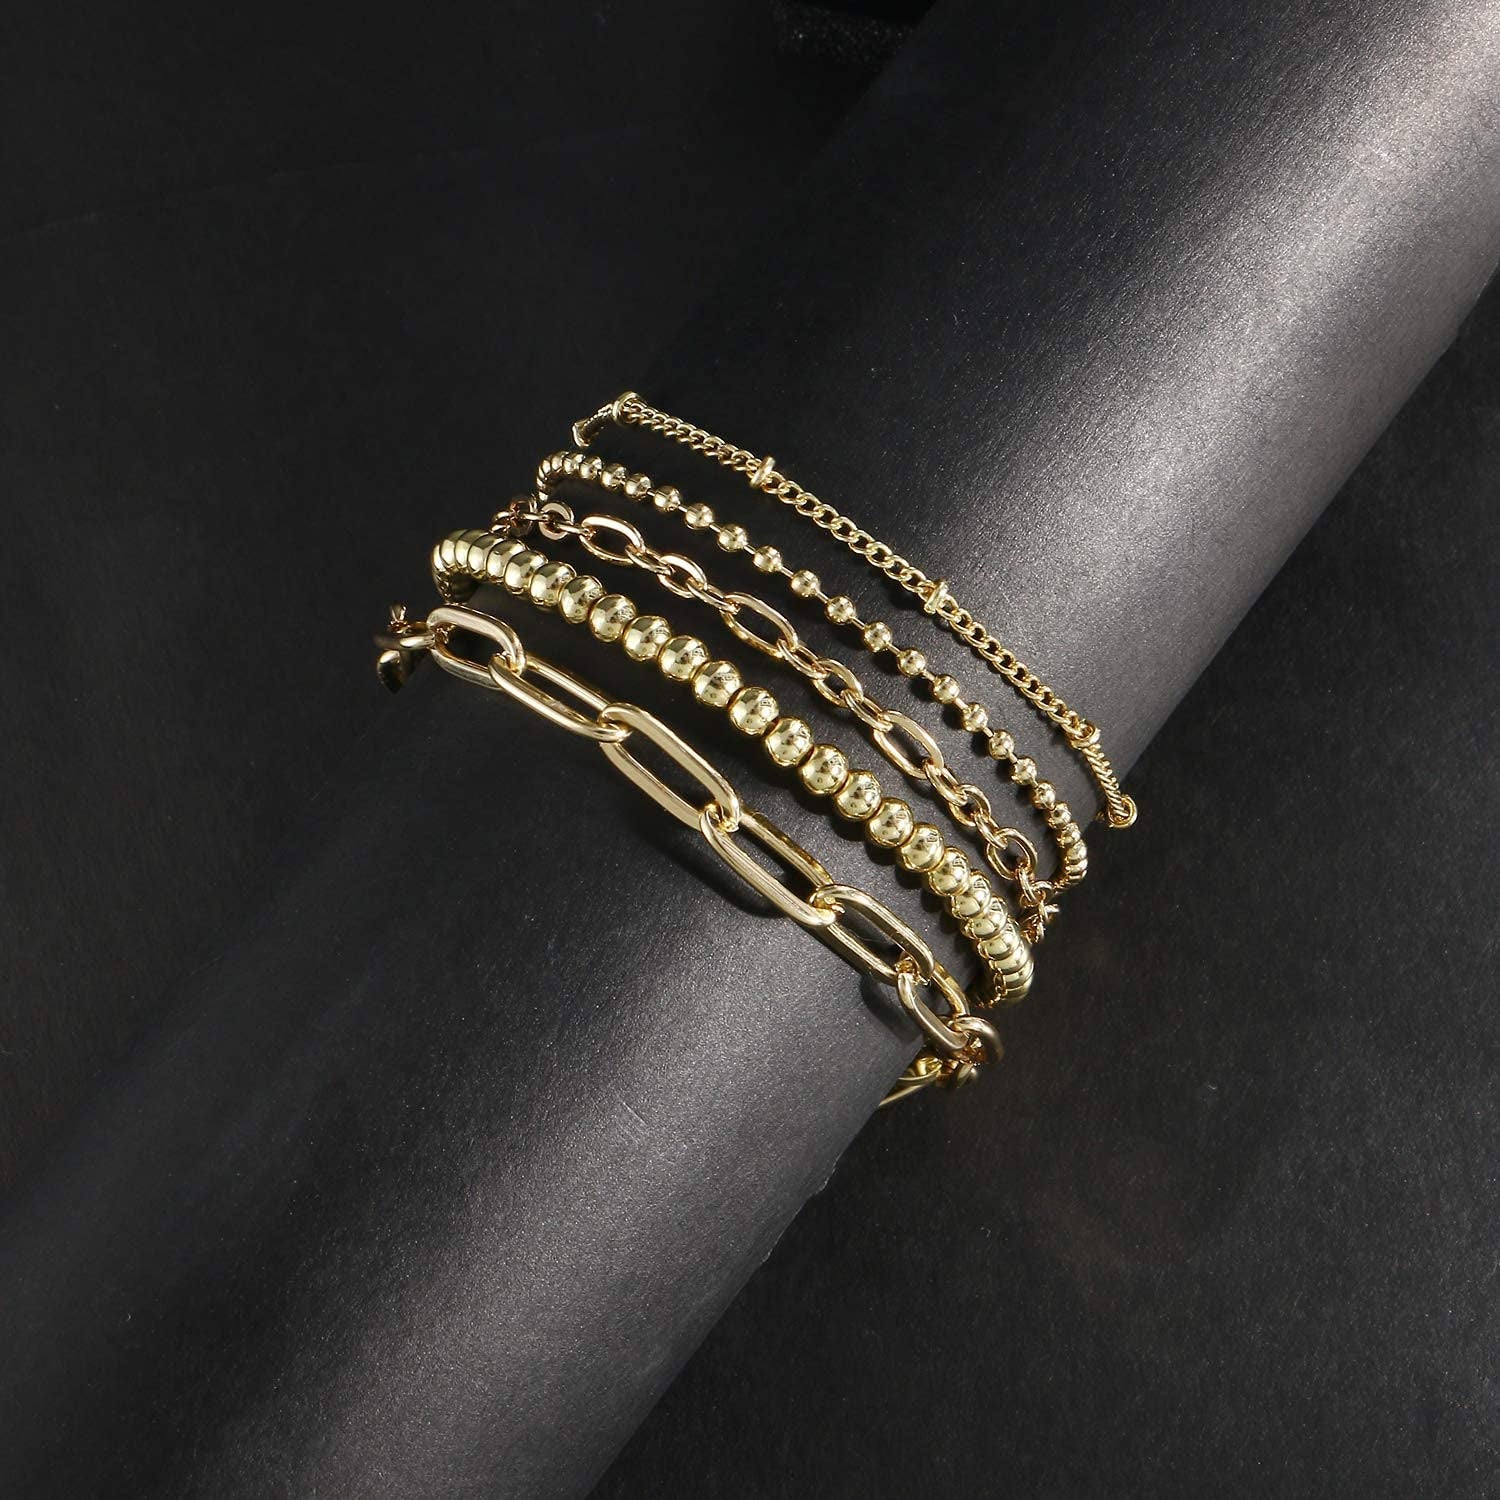 Gold Bracelet Sets for Women Girls 14K Real Gold Chain Dainty Link Paperclip Bracelets Stake Adjustable Layered Metal Link Bracelet Set Fashion Jewelry